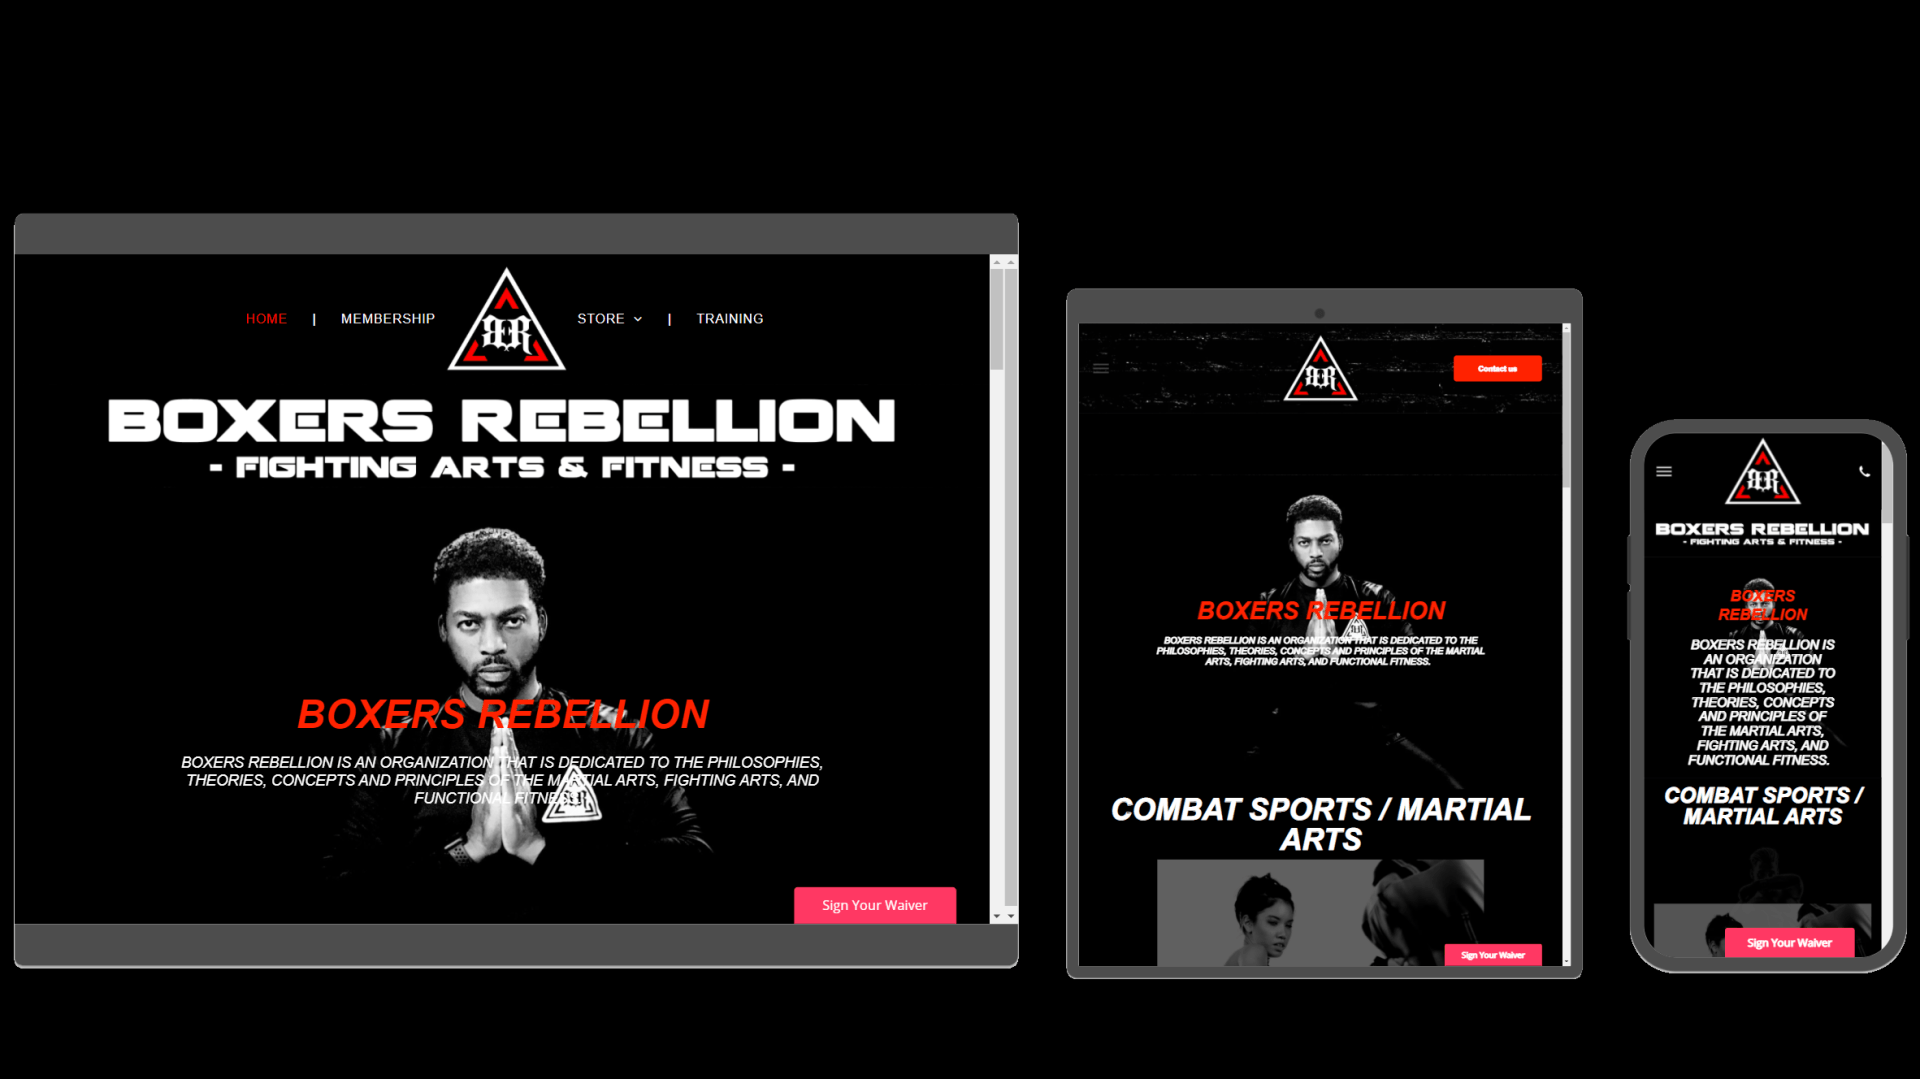 Boxers Rebellion Fighting Arts & Fitness grappling training program that consist of wrestling, judo, hapkido, and Brazilian jiu jitsu. .